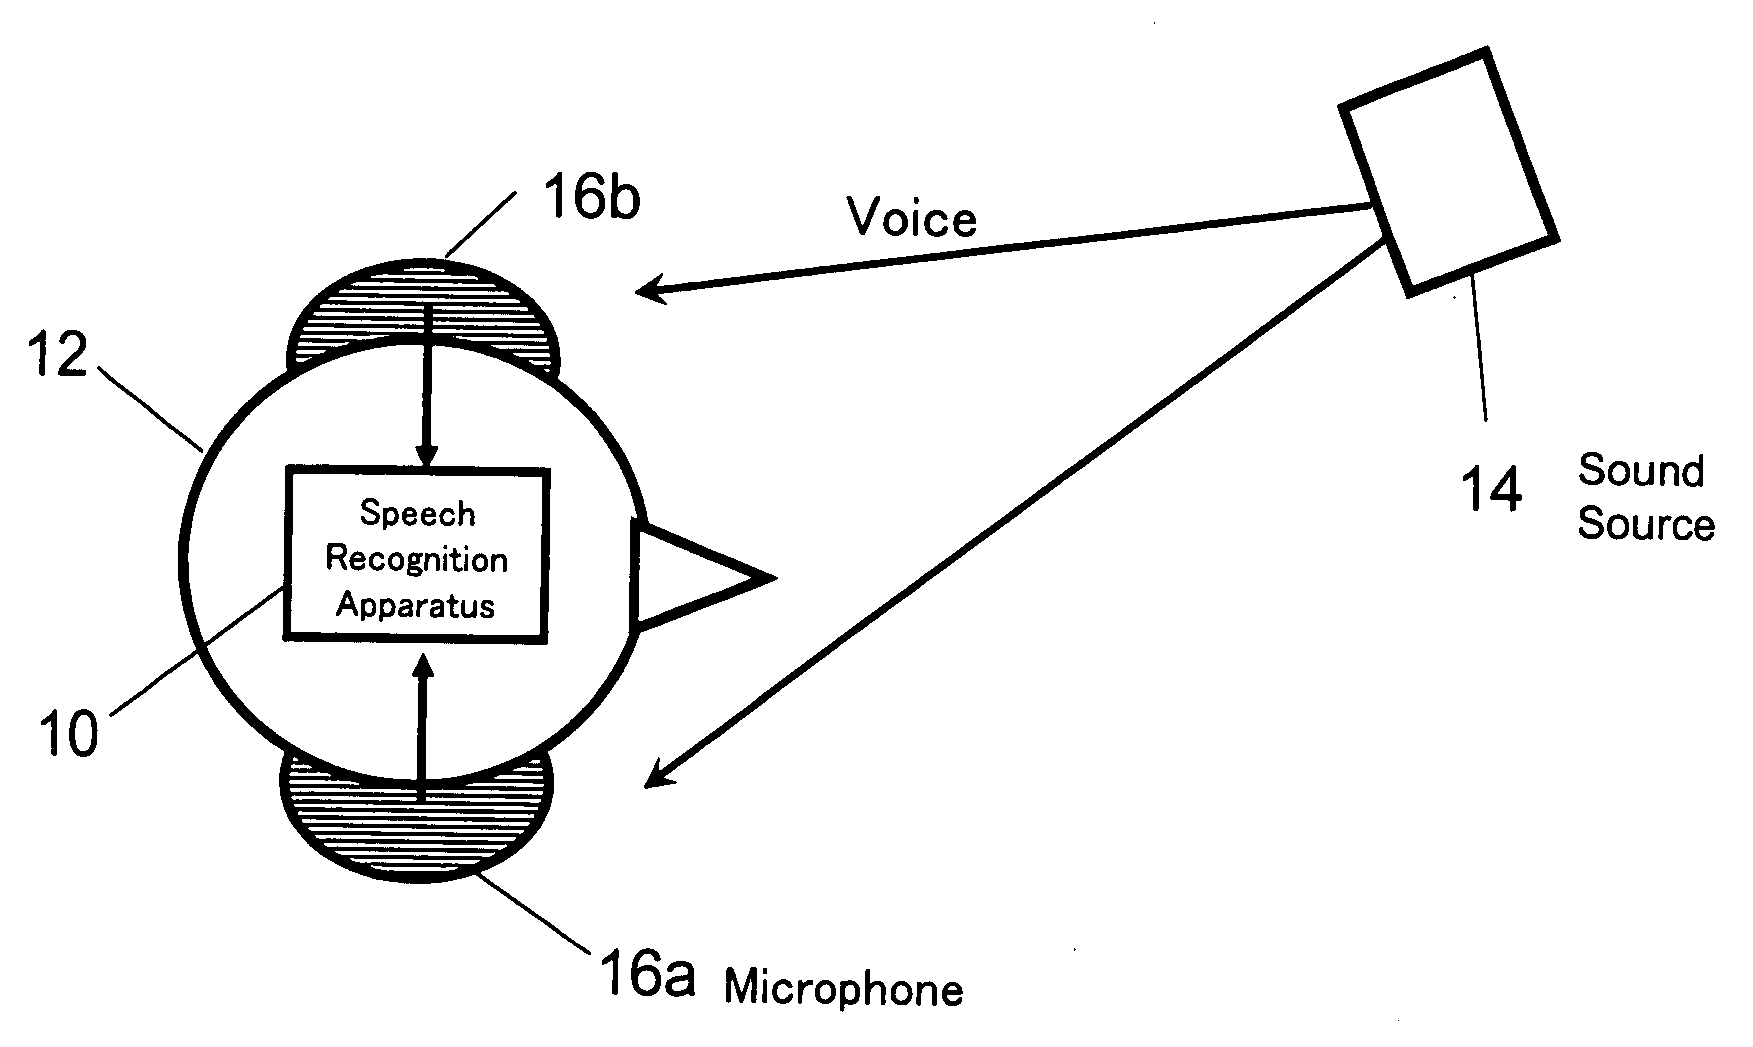 Speech Recognition Apparatus